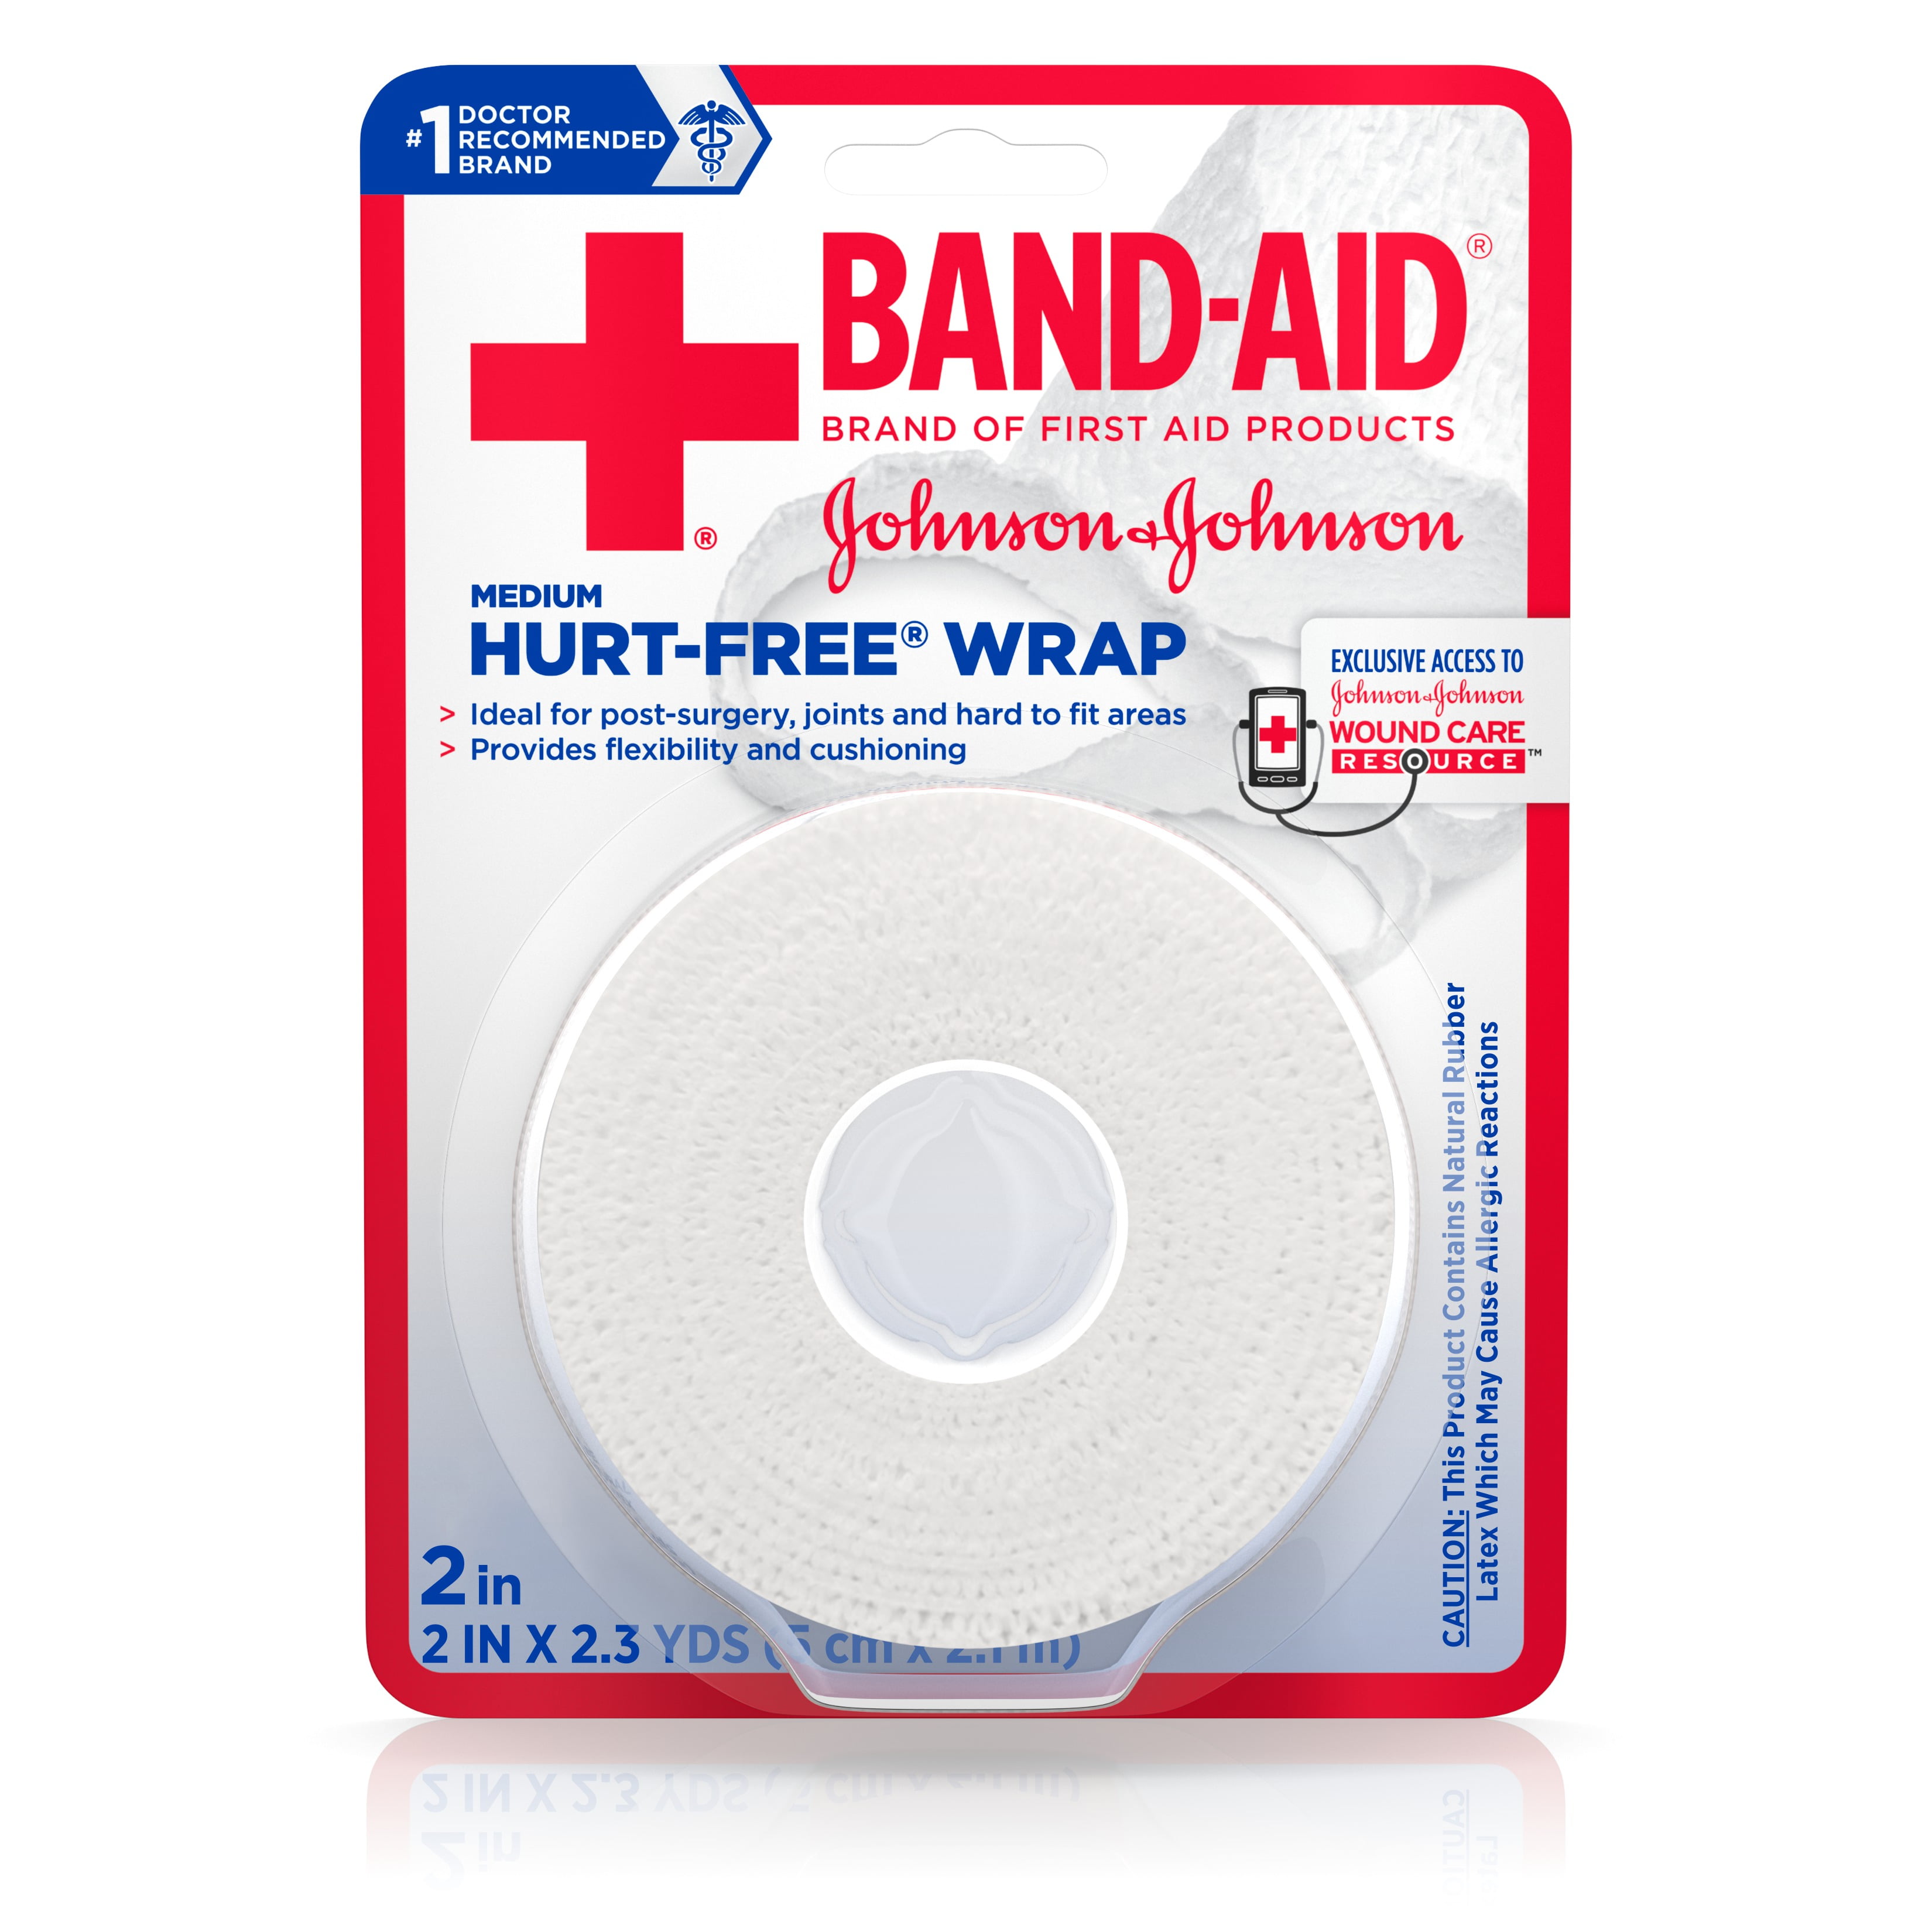 TOUGH WRAP™ Self-Adherent Wound Wrap Bandages